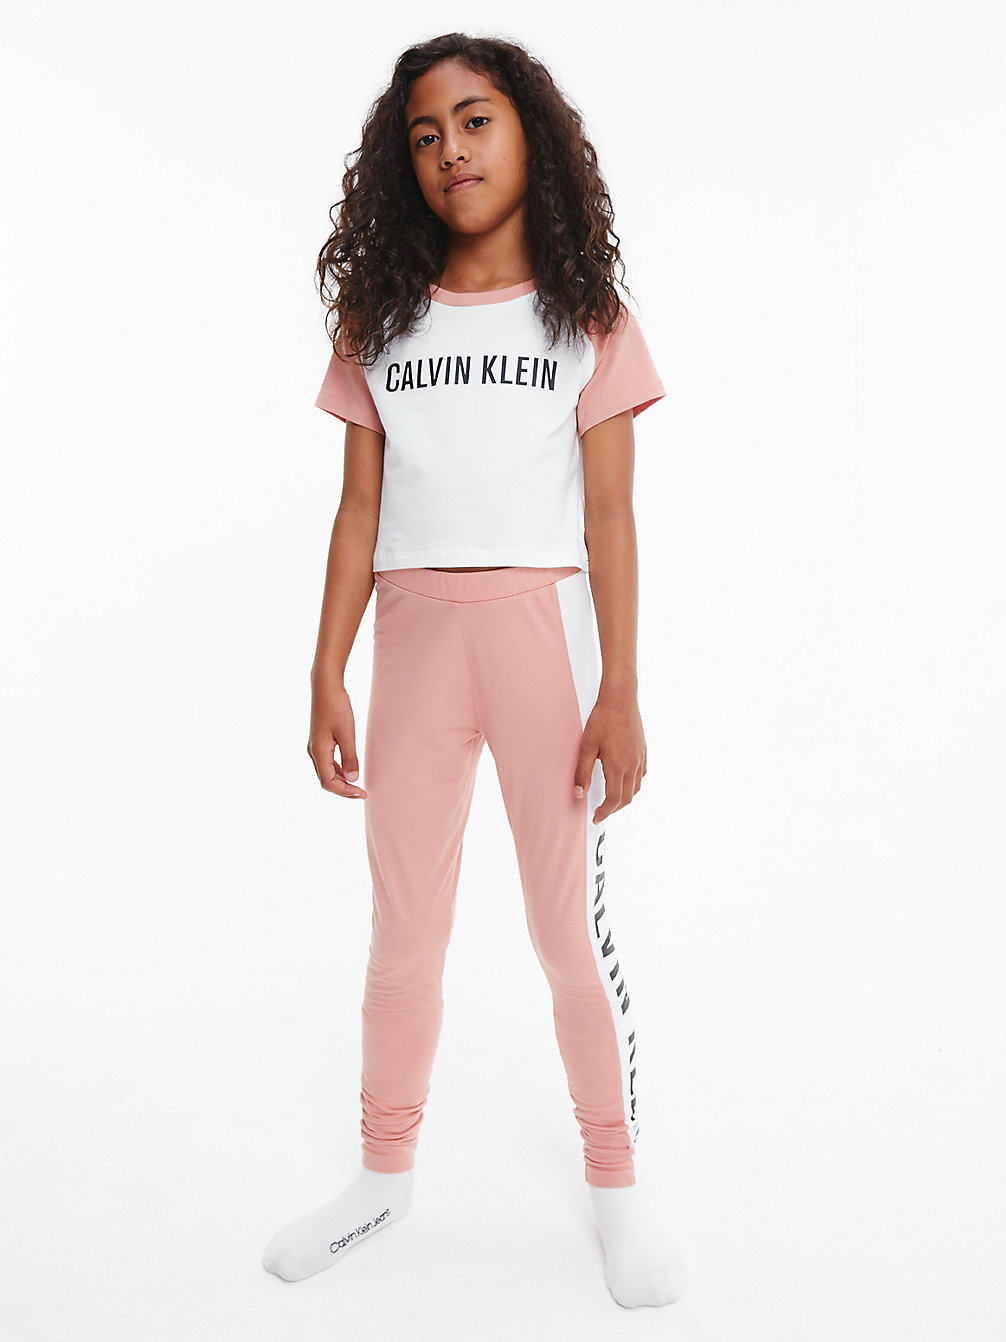 PINKMOCHA/W/PVHWHITE Pyjama-Set – Intense Power undefined girls Calvin Klein